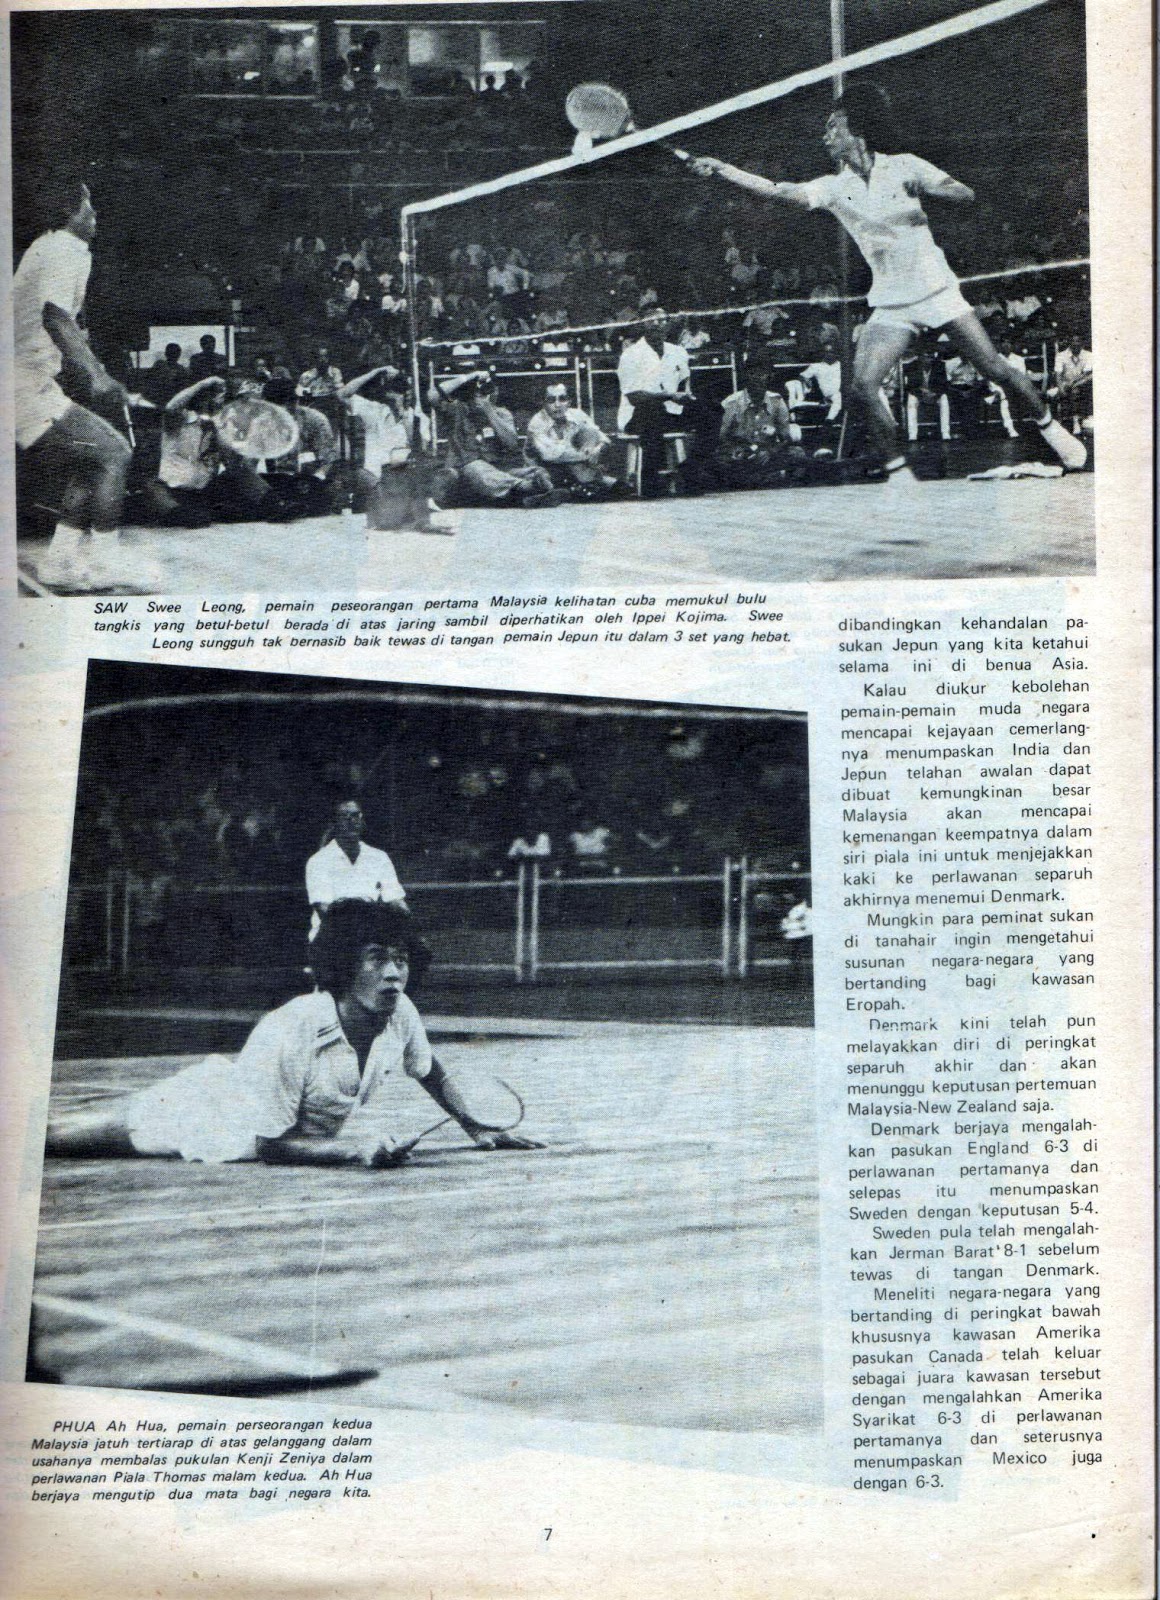 MynahBirds Badminton Archives Blog 1976 Thomas Cup Preliminary Rounds-Malaysia